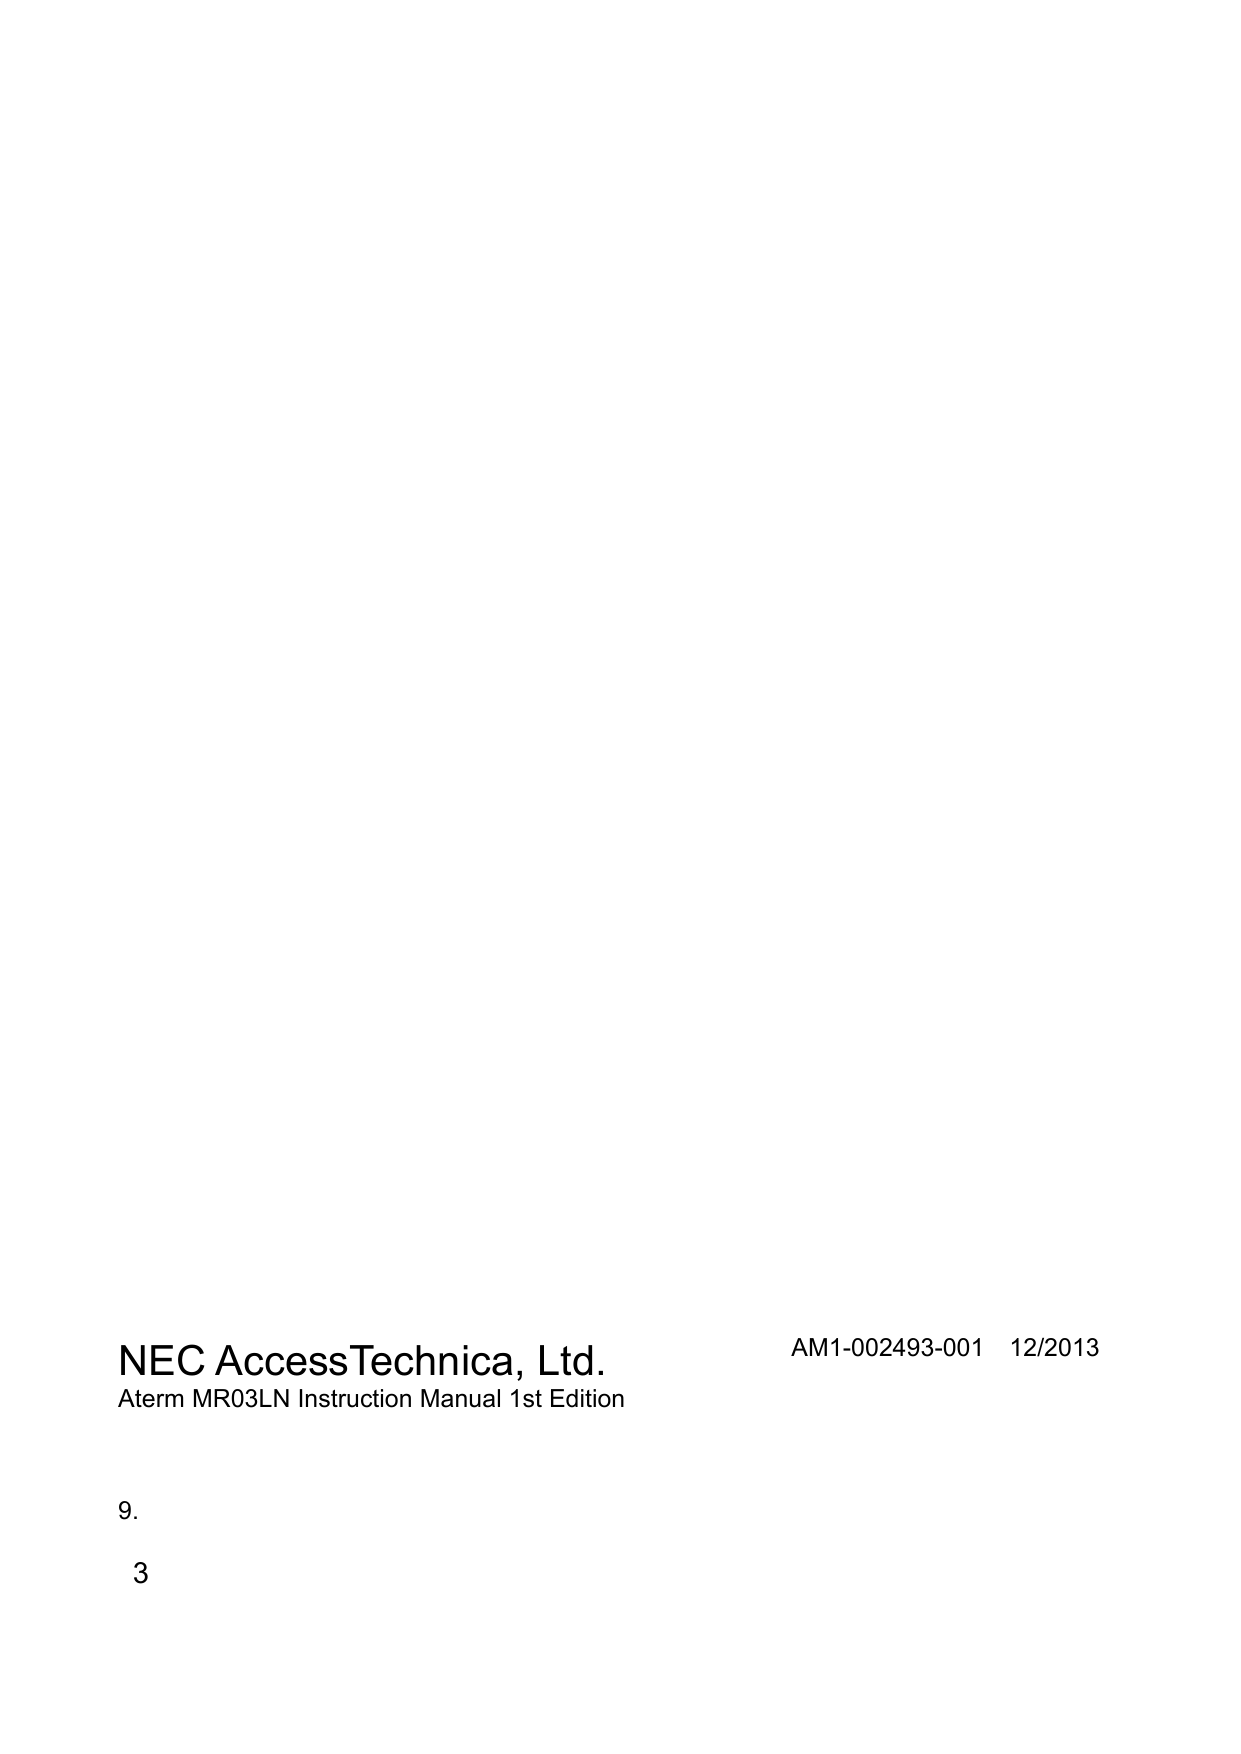   3                                     9.   NEC AccessTechnica, Ltd. Aterm MR03LN Instruction Manual 1st Edition  AM1-002493-001 12/2013    